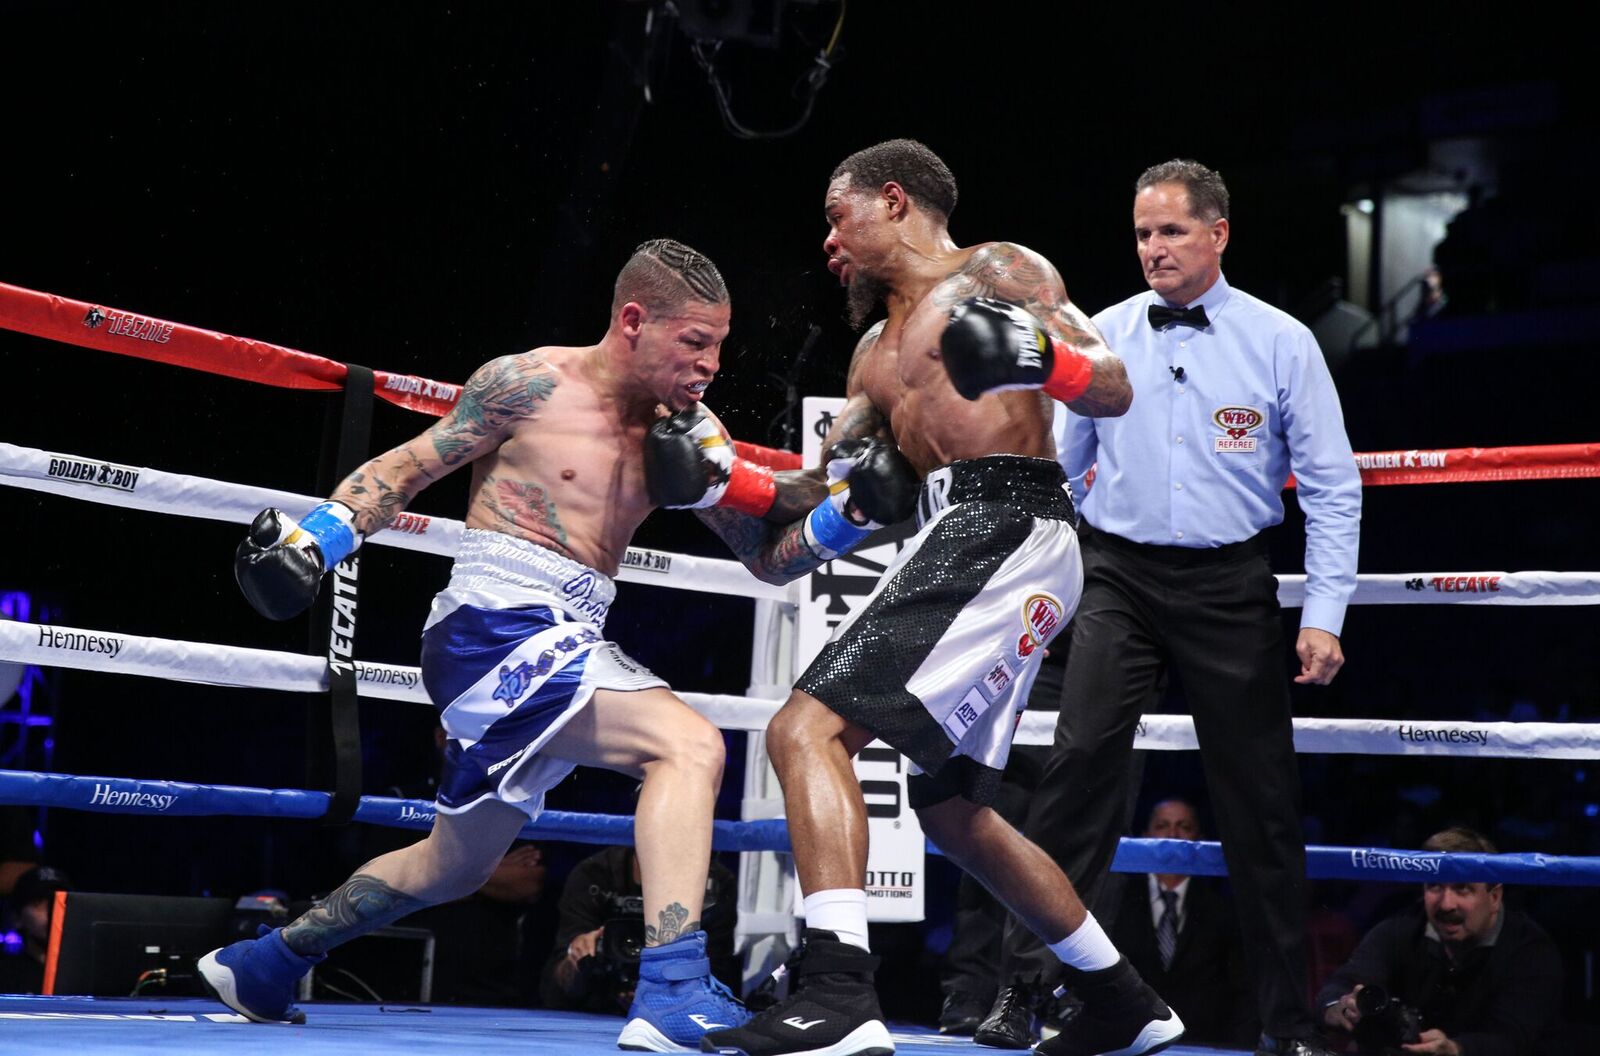 Junior lightweight Lamont Roach (right) vs. Orlando Cruz. Photo credit: Hector Santos Guia